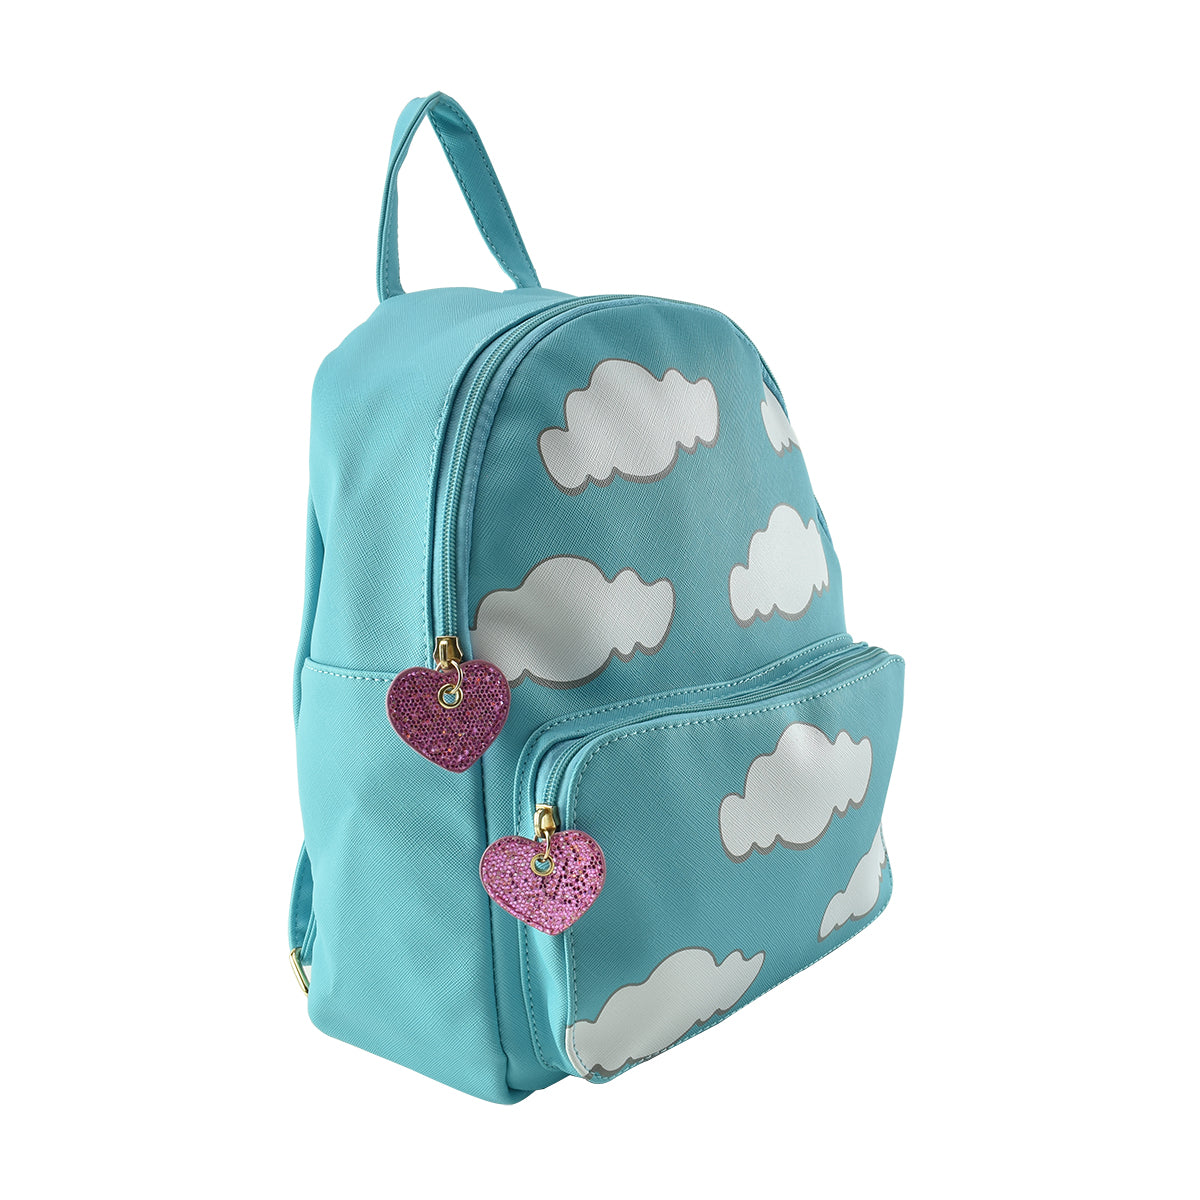 Backpack Para Dama Peschelle Nubes